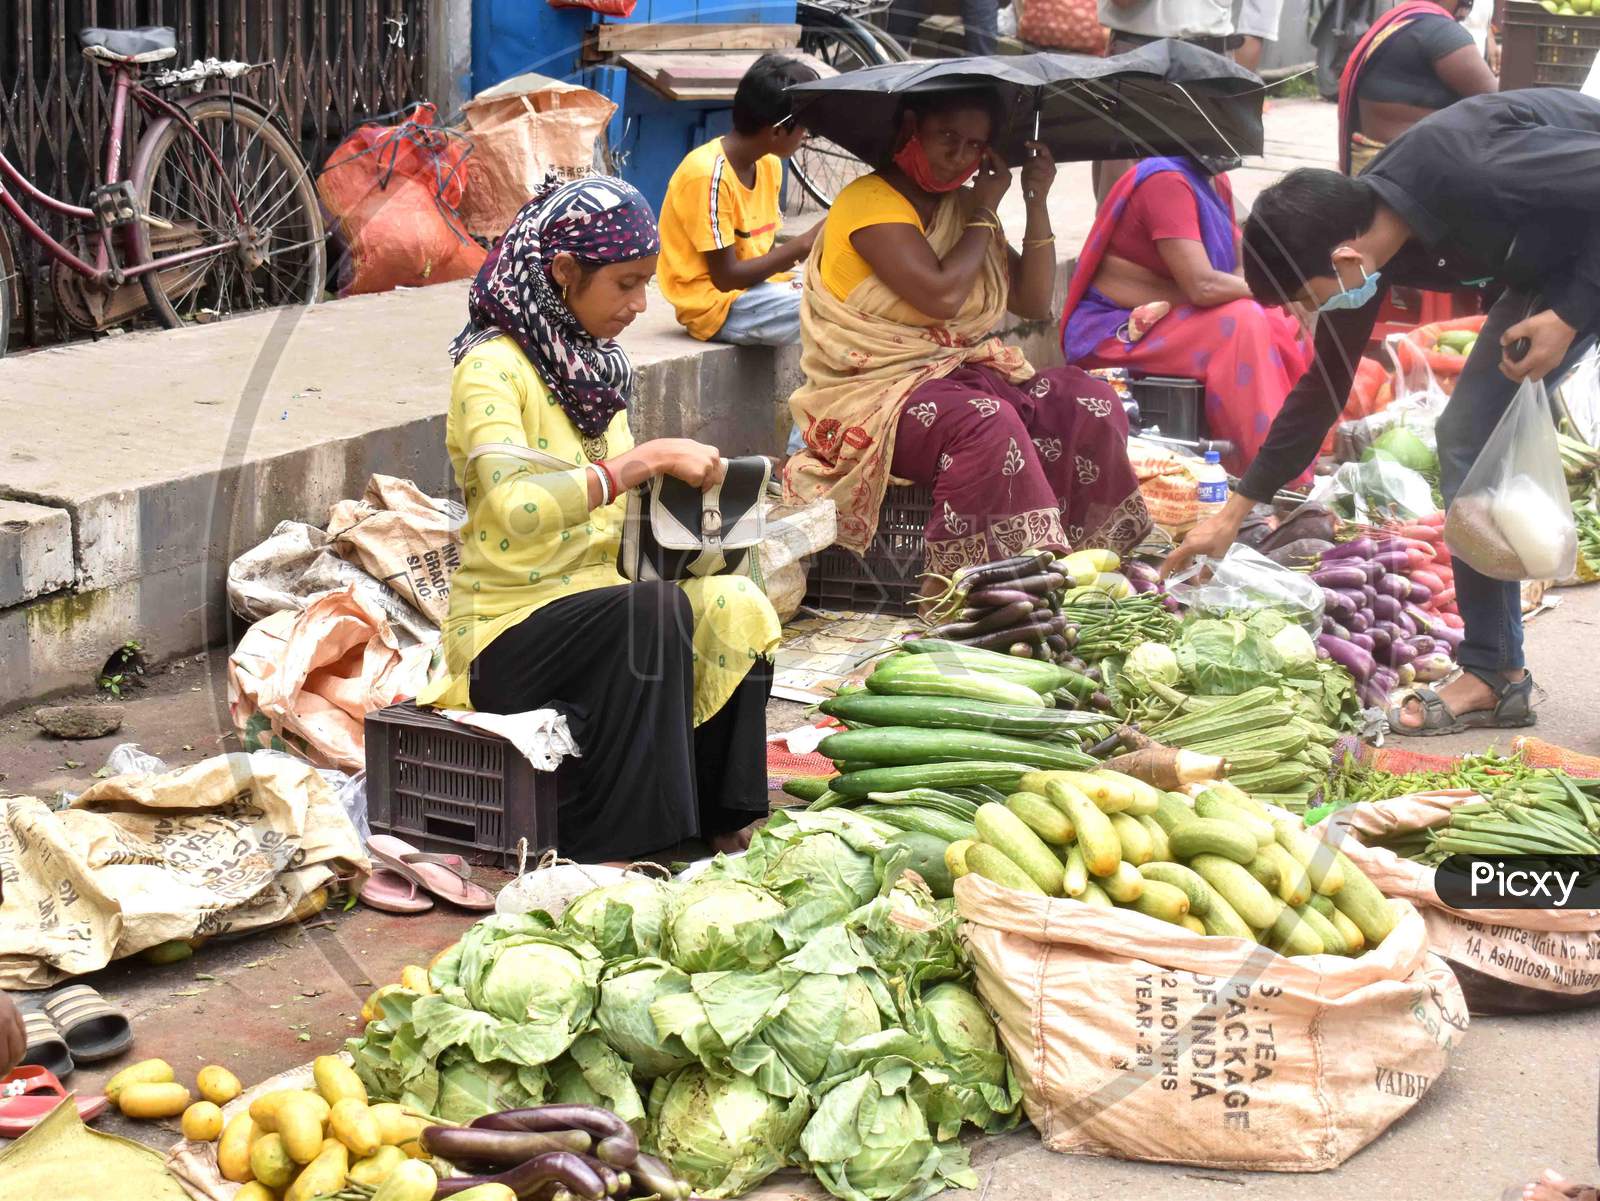 Vendors selling vegetables